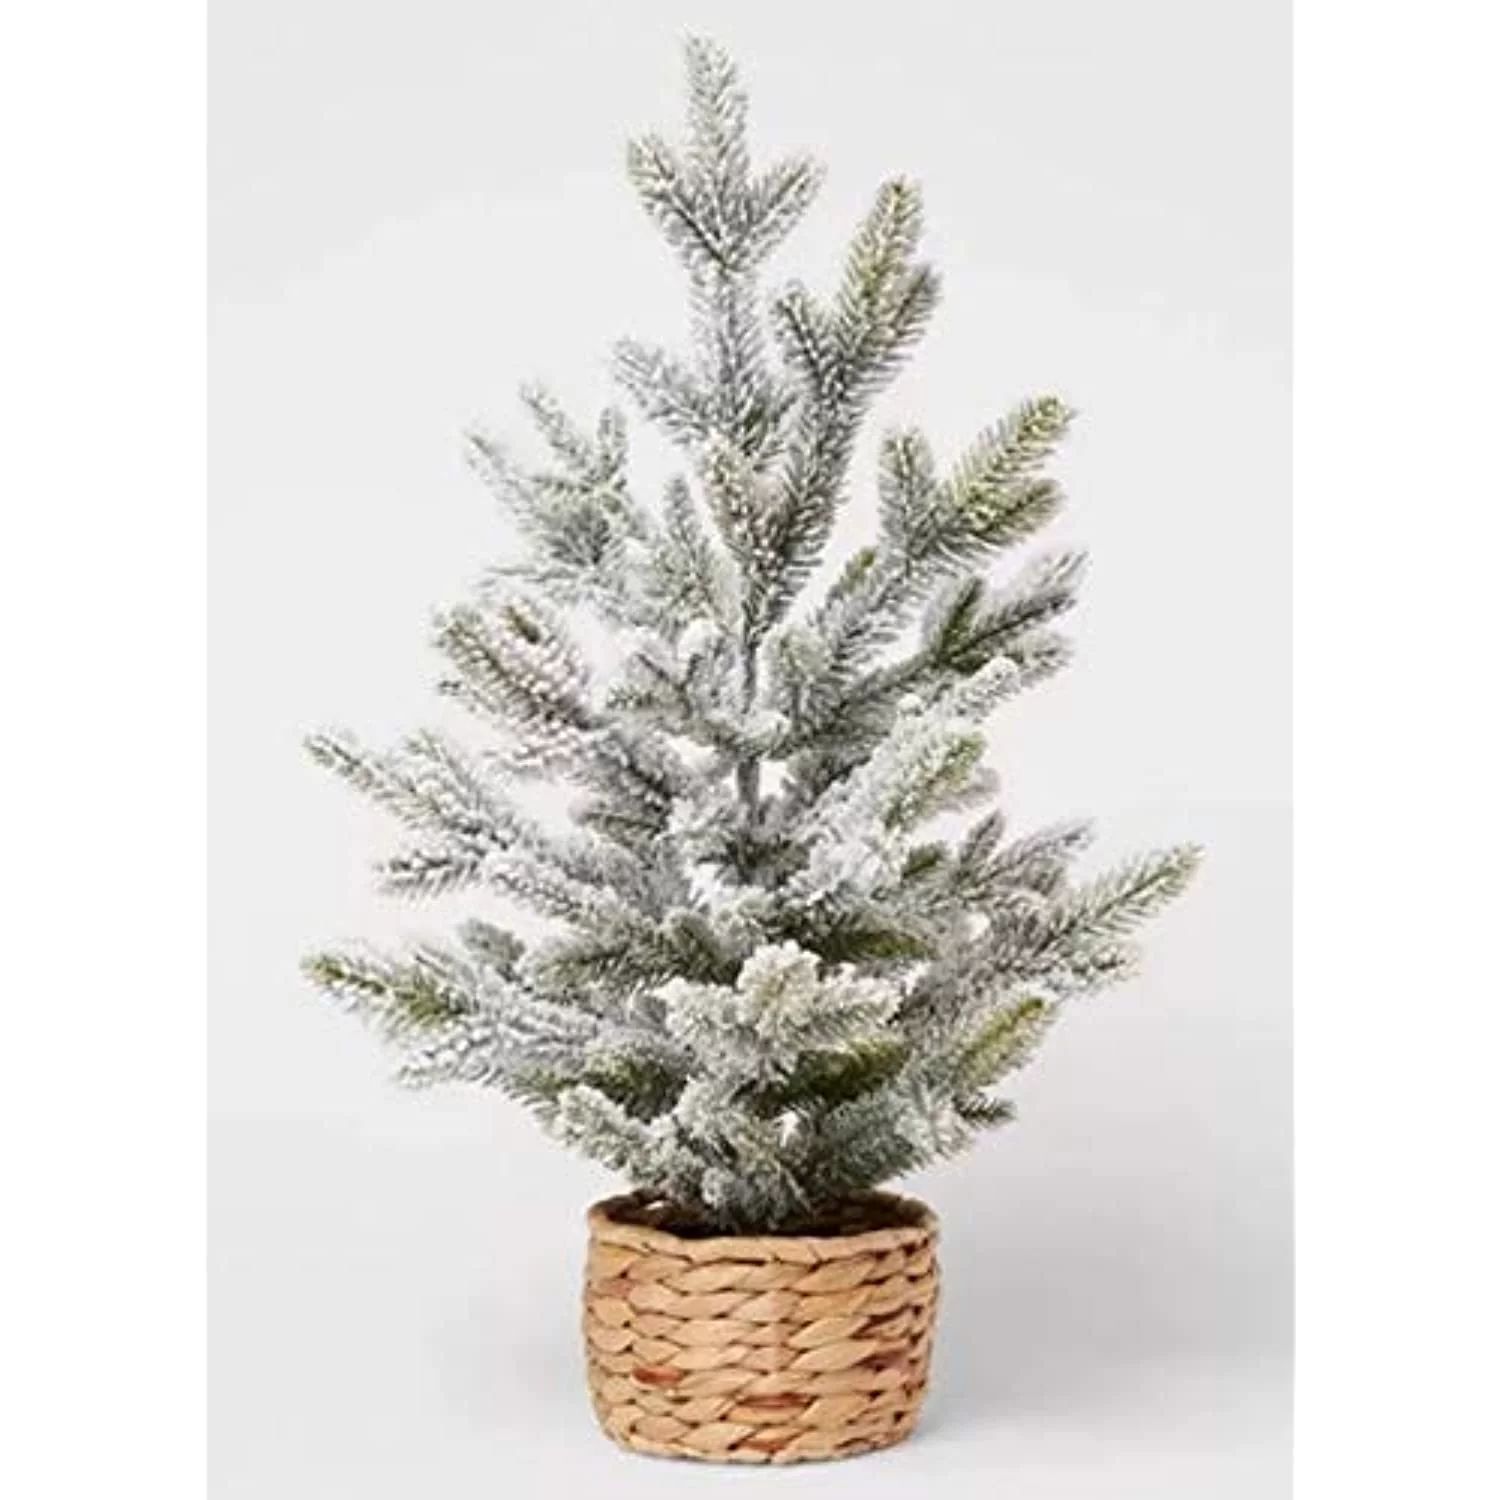 Artificial Snow Flocked Christmas Tabletop Tree - Holiday Decor (2ft) | Walmart (US)